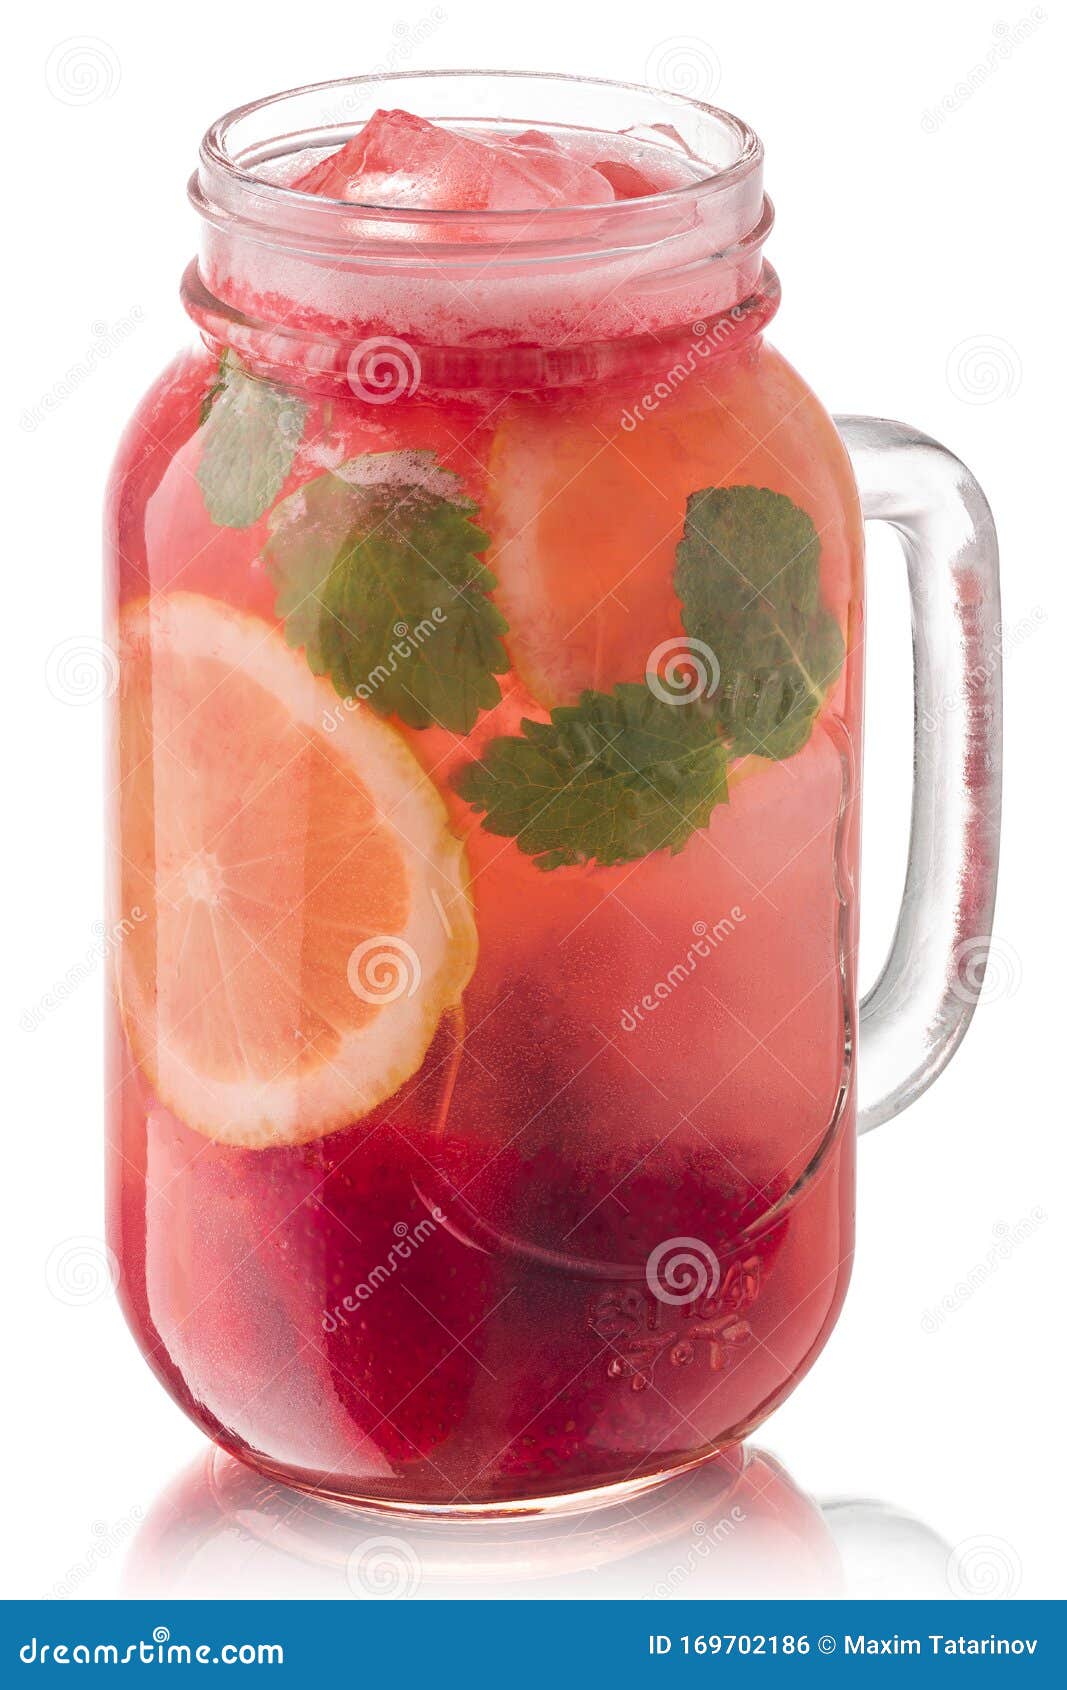 https://thumbs.dreamstime.com/z/strawberry-mint-lemonade-jar-paths-mason-isolated-169702186.jpg